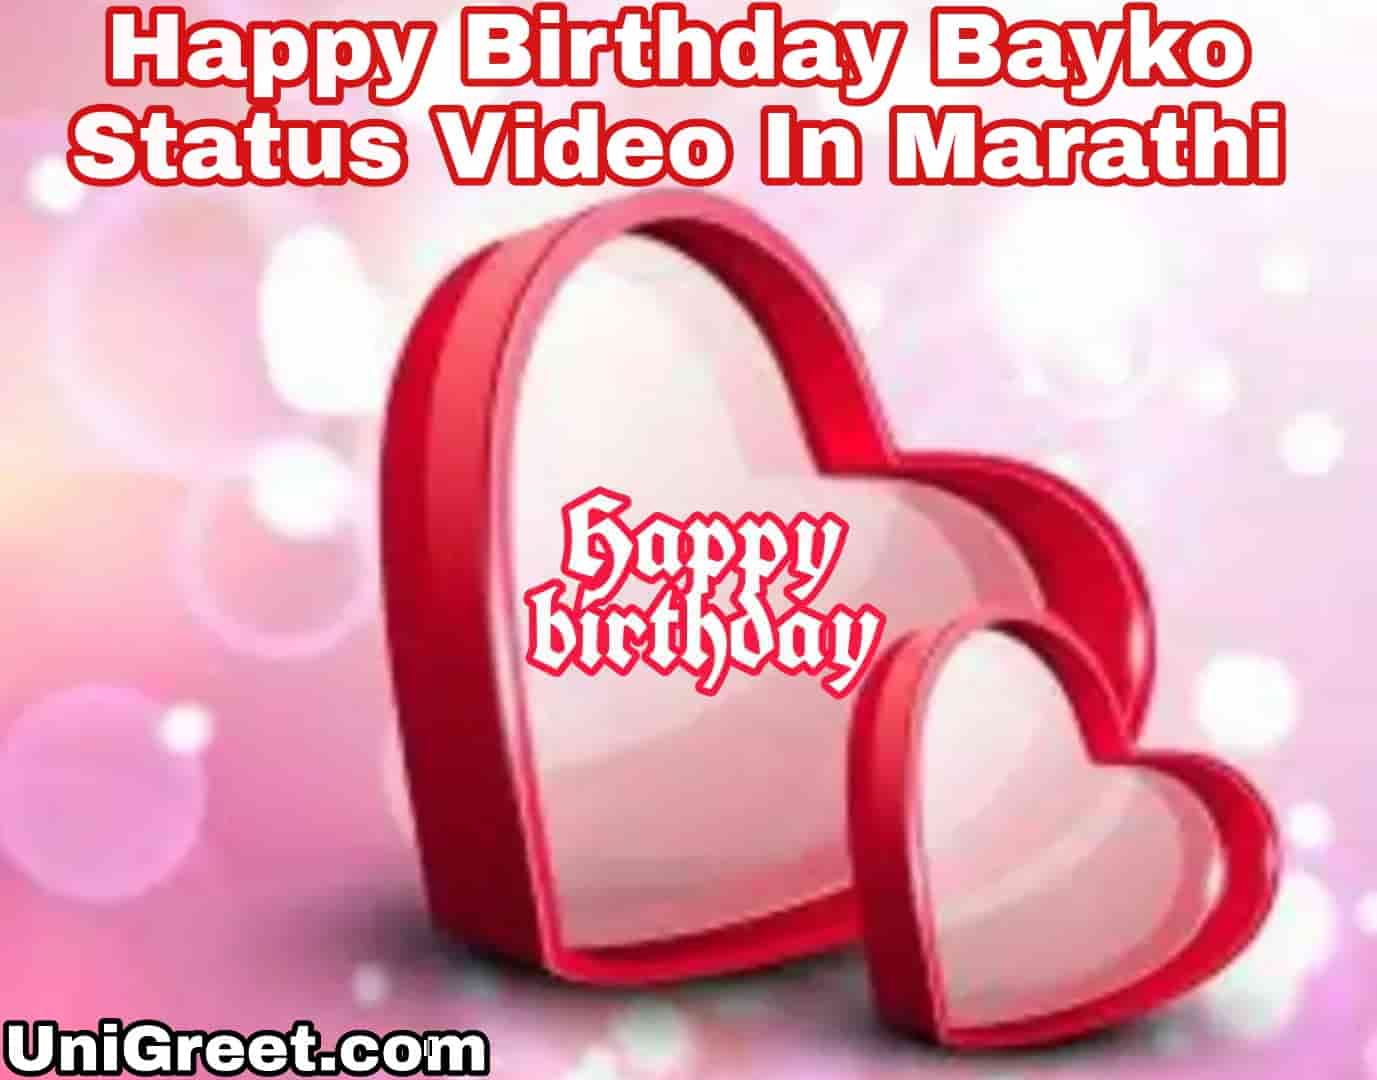 Happy birthday bayko / Wife Marathi status Video Download